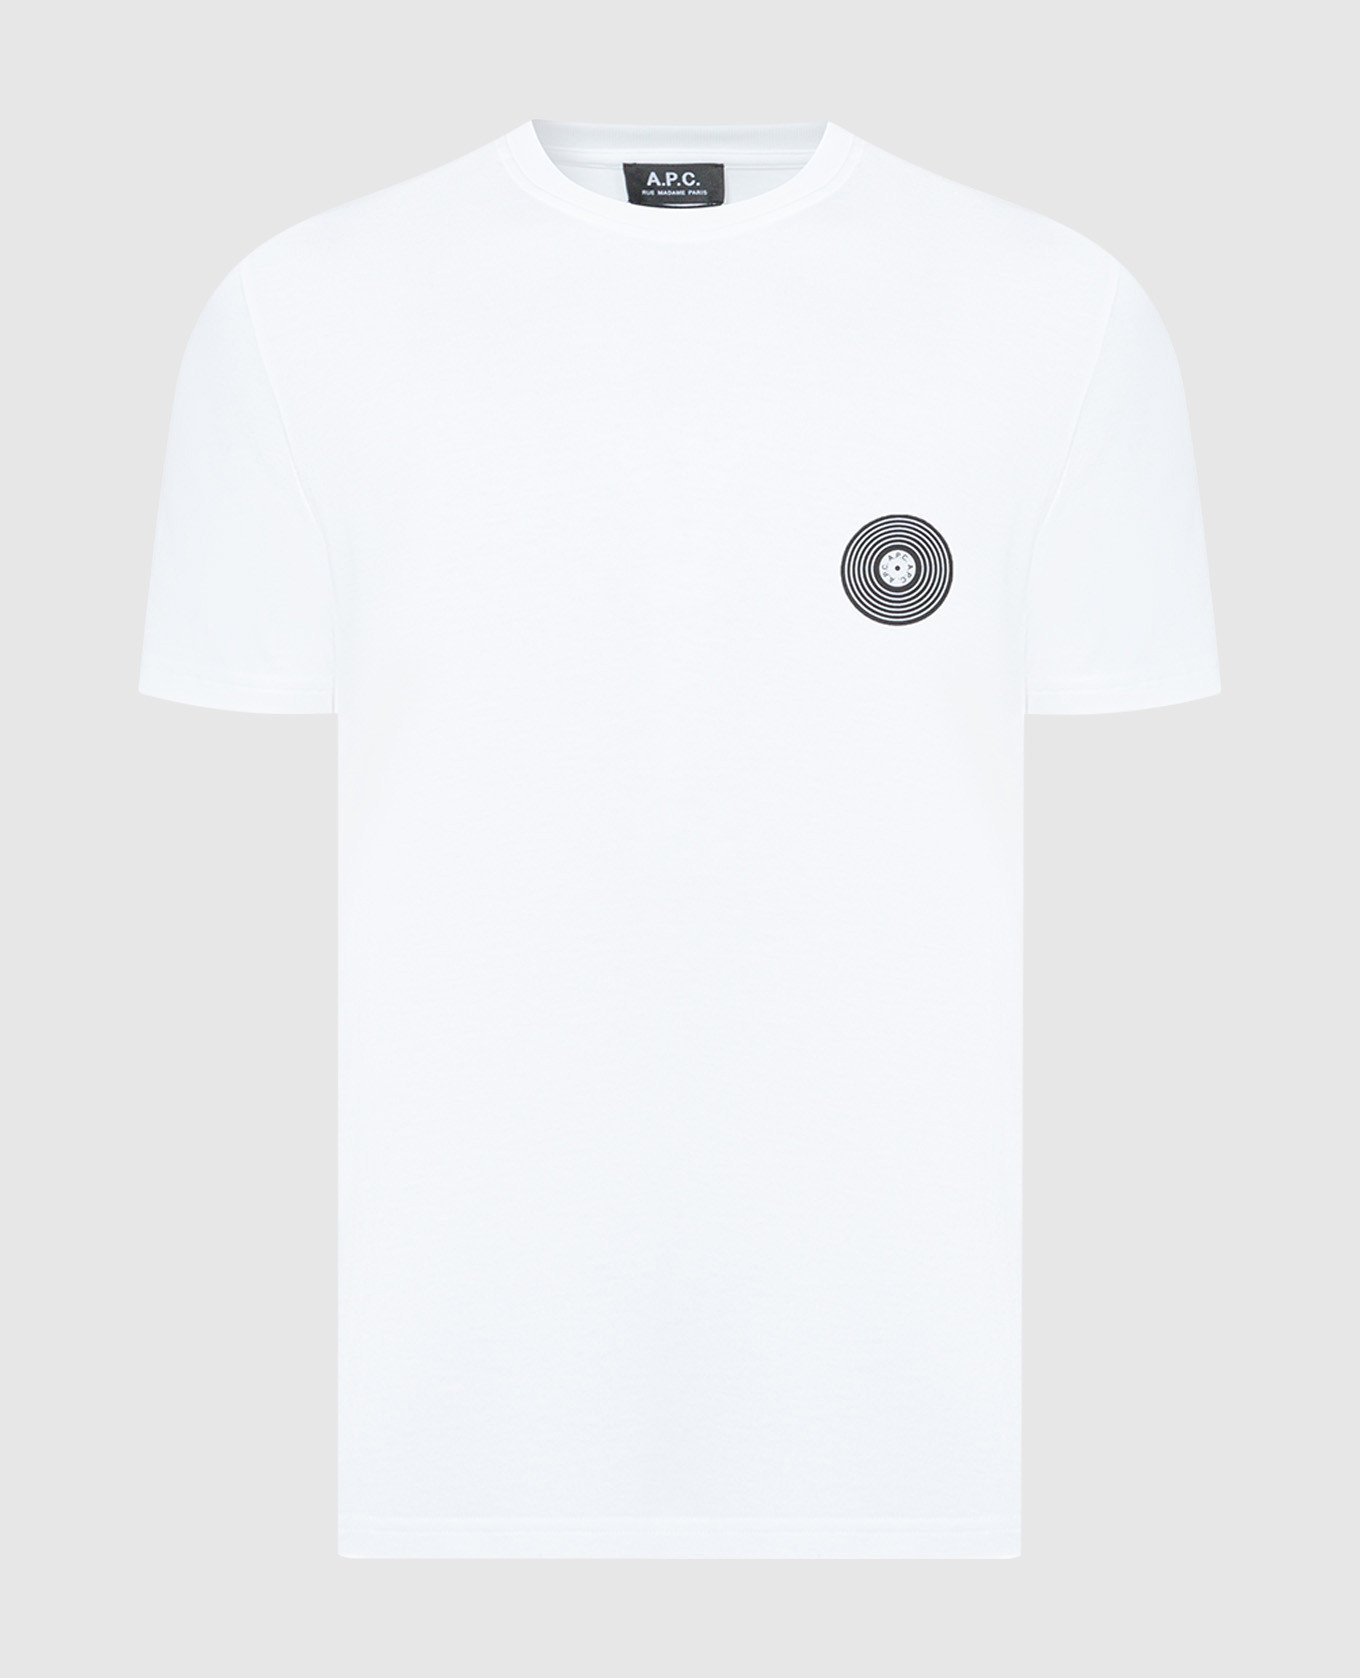 Madison logo print white t-shirt